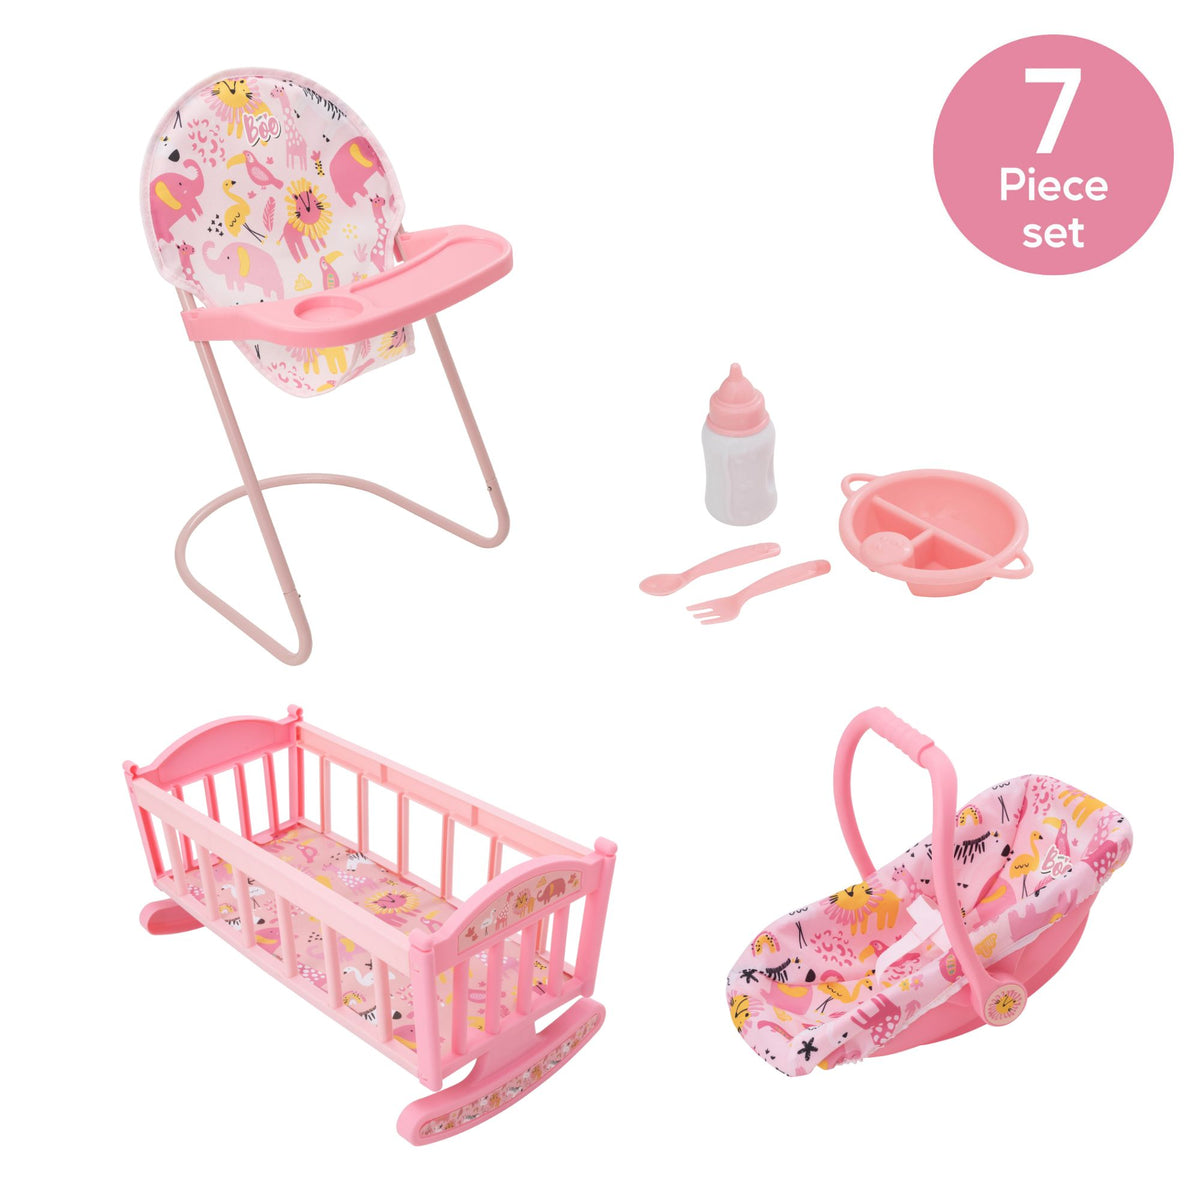 BabyBoo Dolls Nursery Playset | 7 Pieces Included